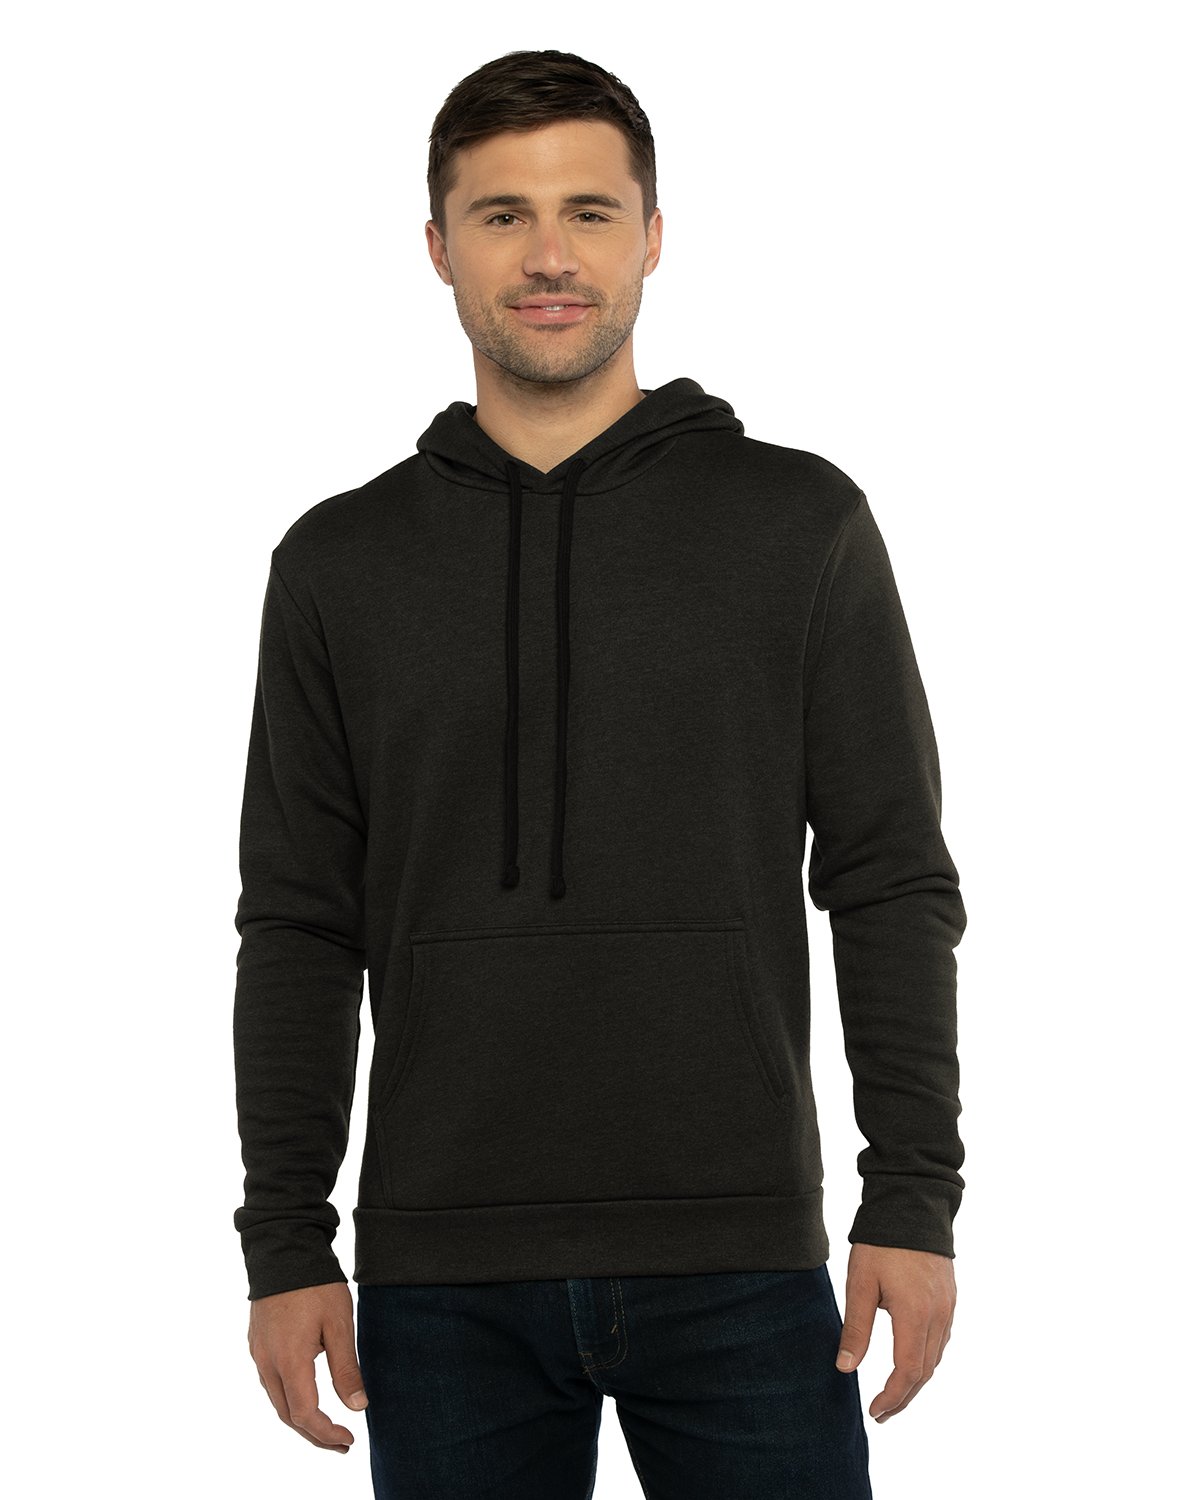 Next | Hooded Unisex Sweatshirt Pullover Apparel Level Malibu alphabroder